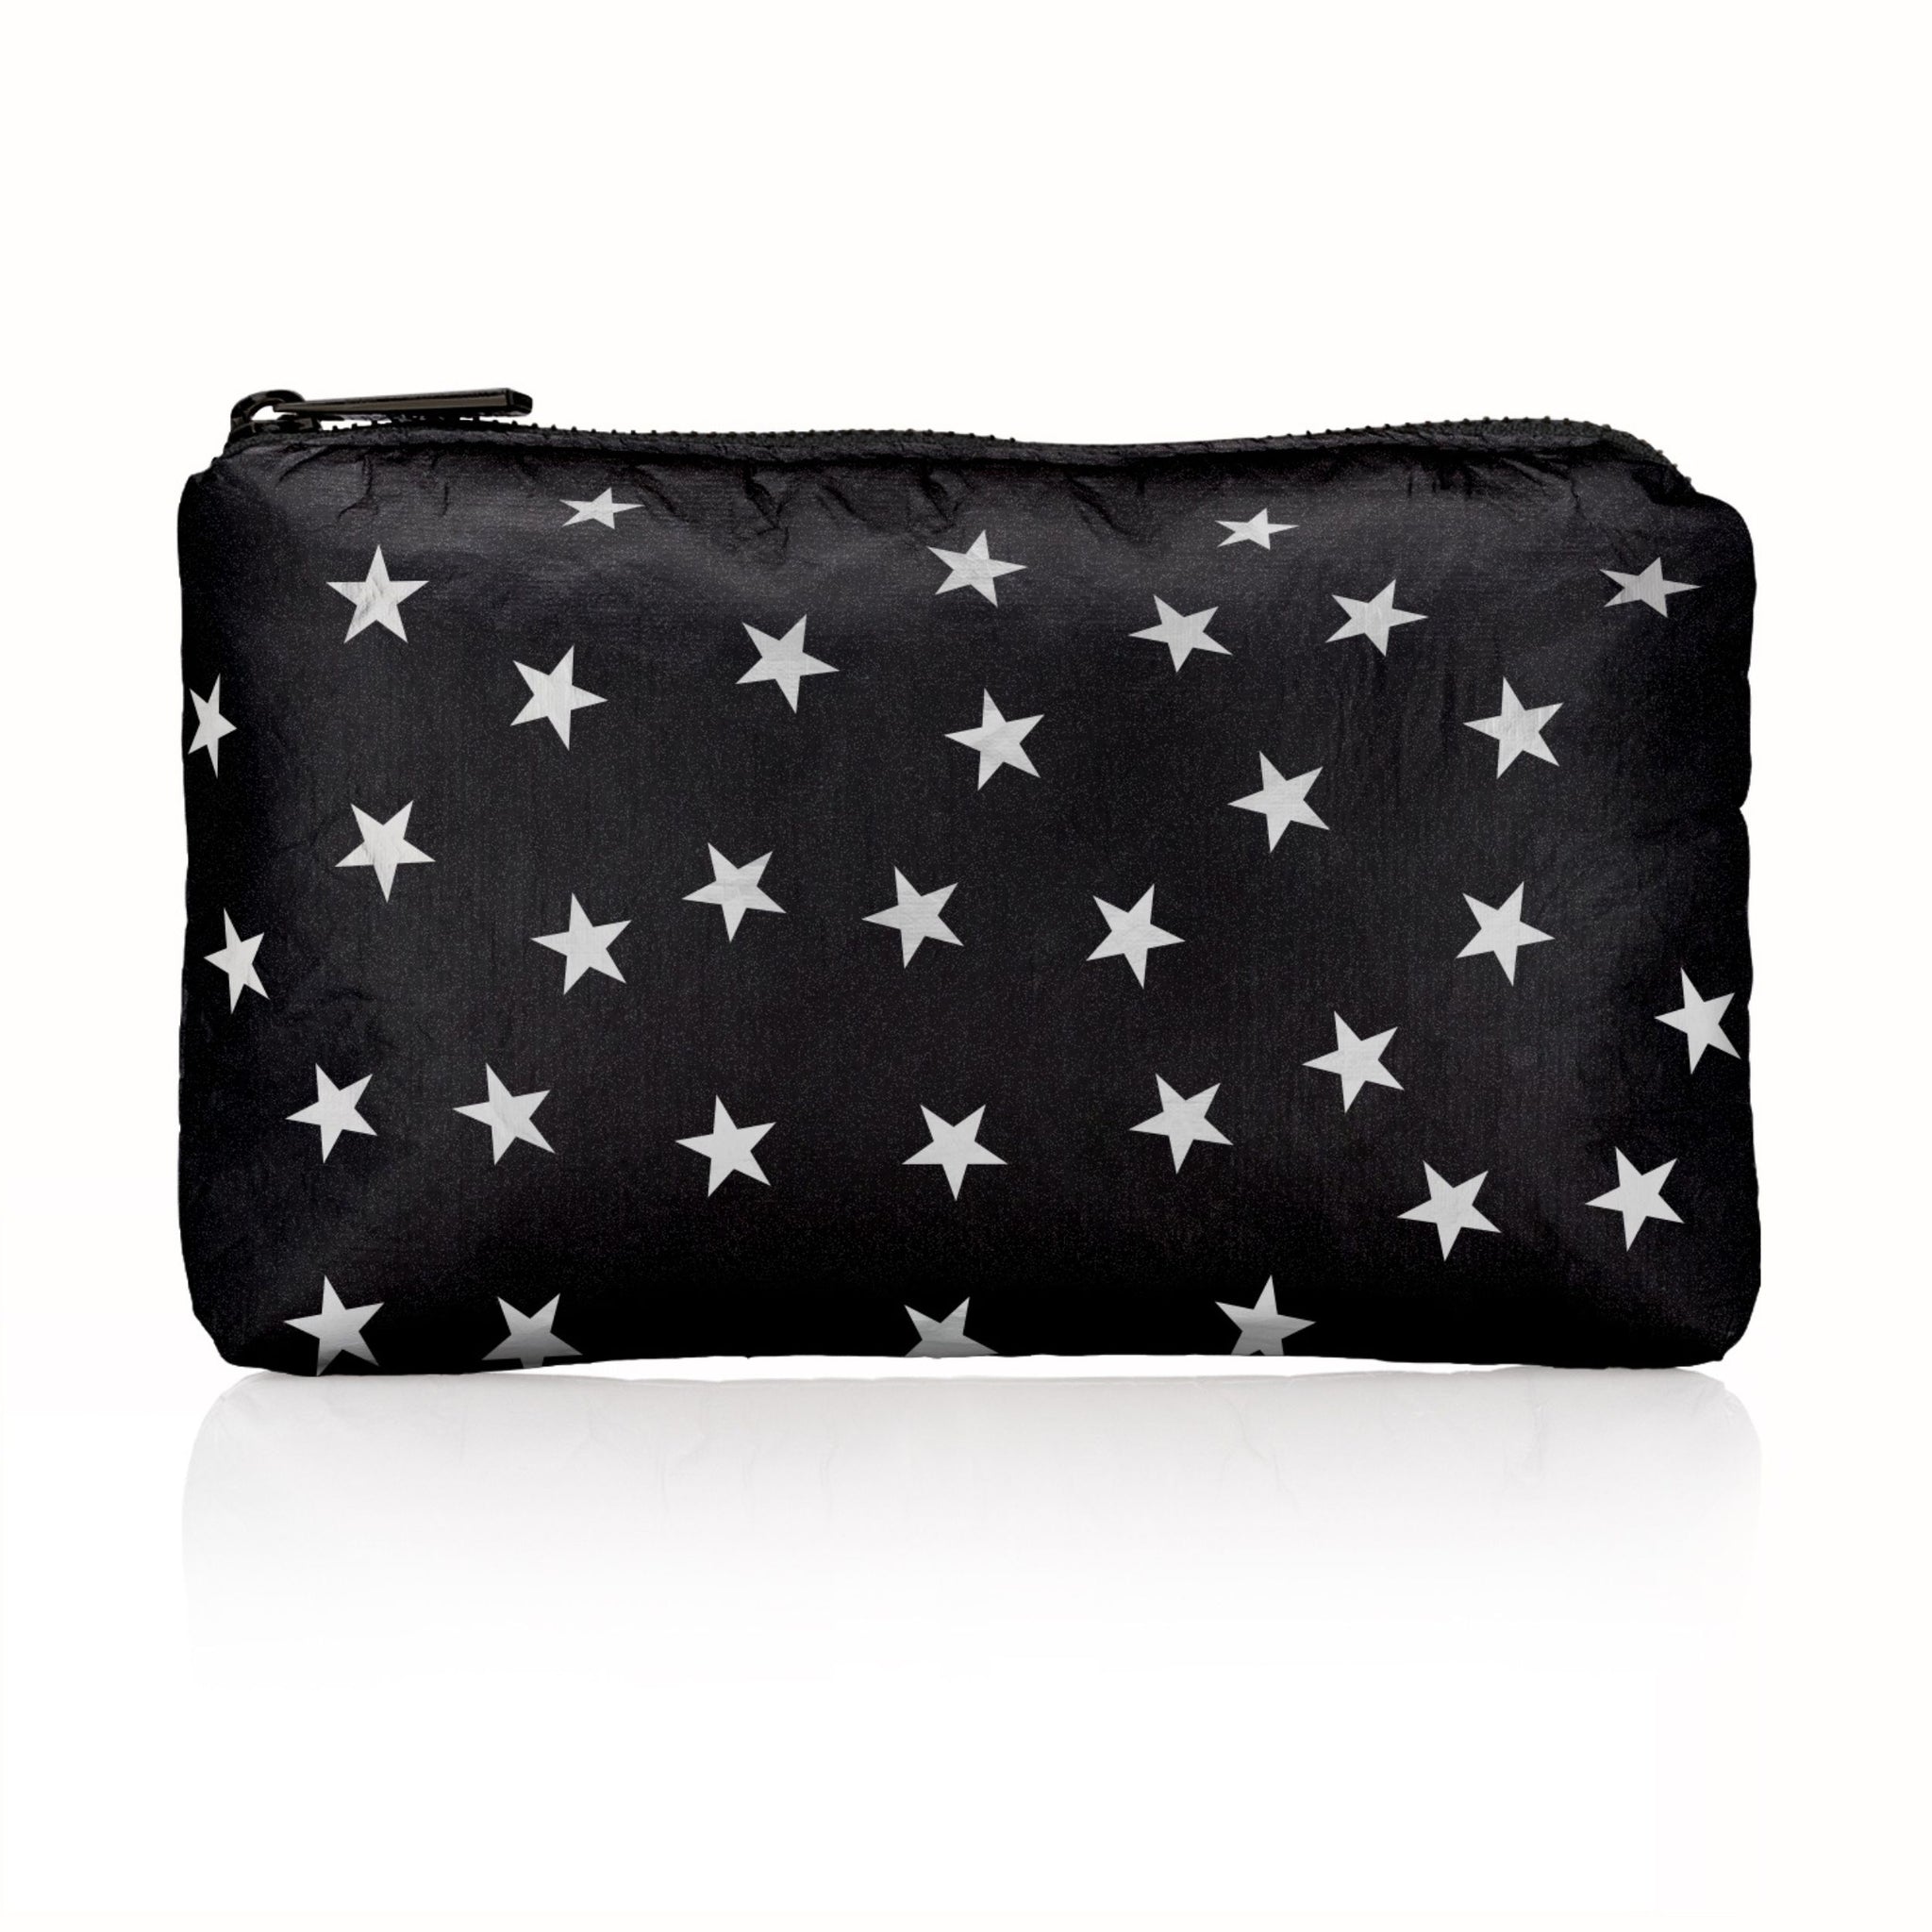 Mini Zipper Pack in Shimmer Black with Myriad White Stars